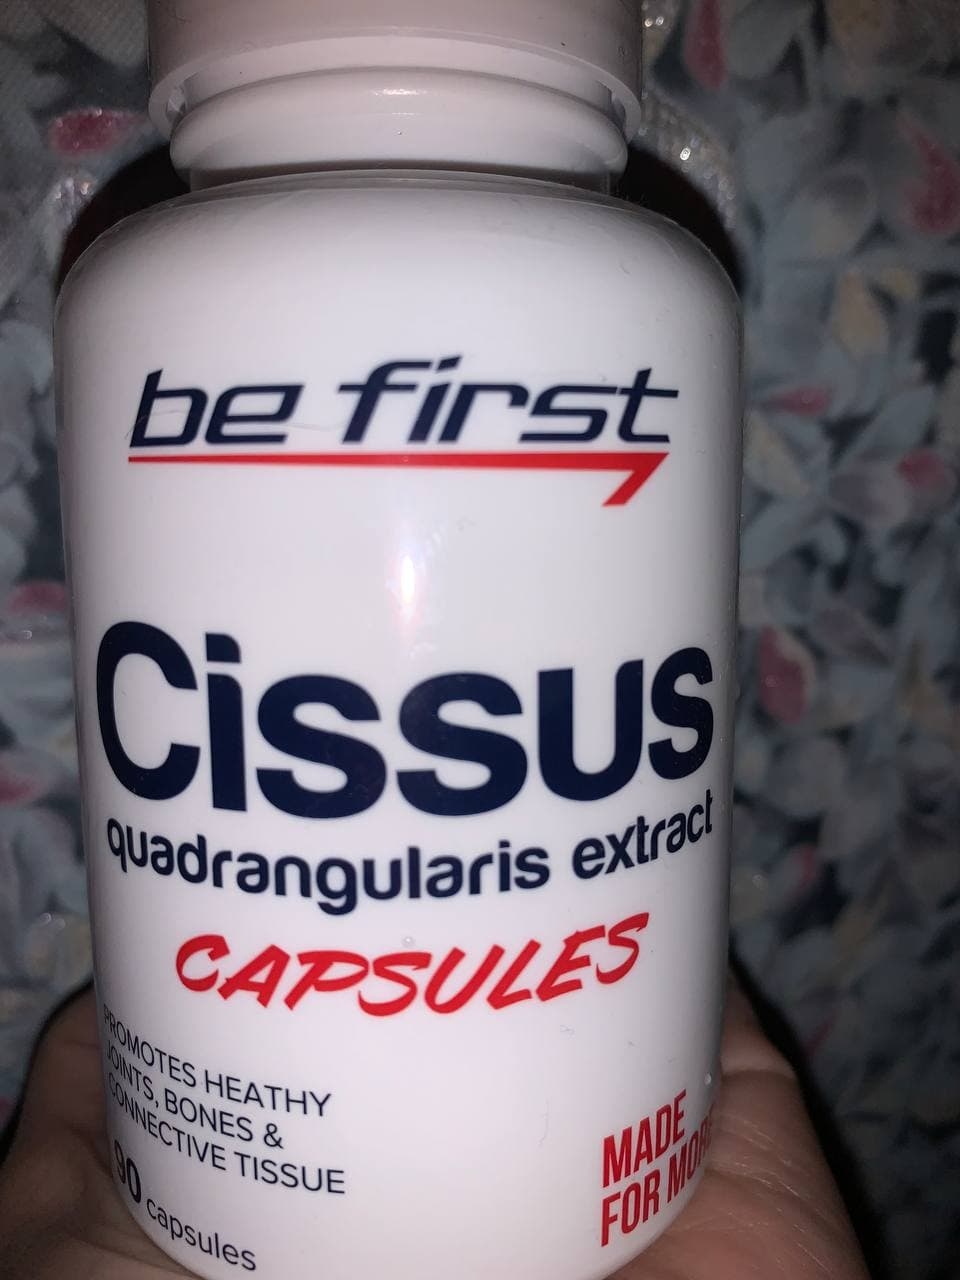 Be First Cissus Quadrangularis Extract Capsules 120 капсул - Сустав перестал скрипеть